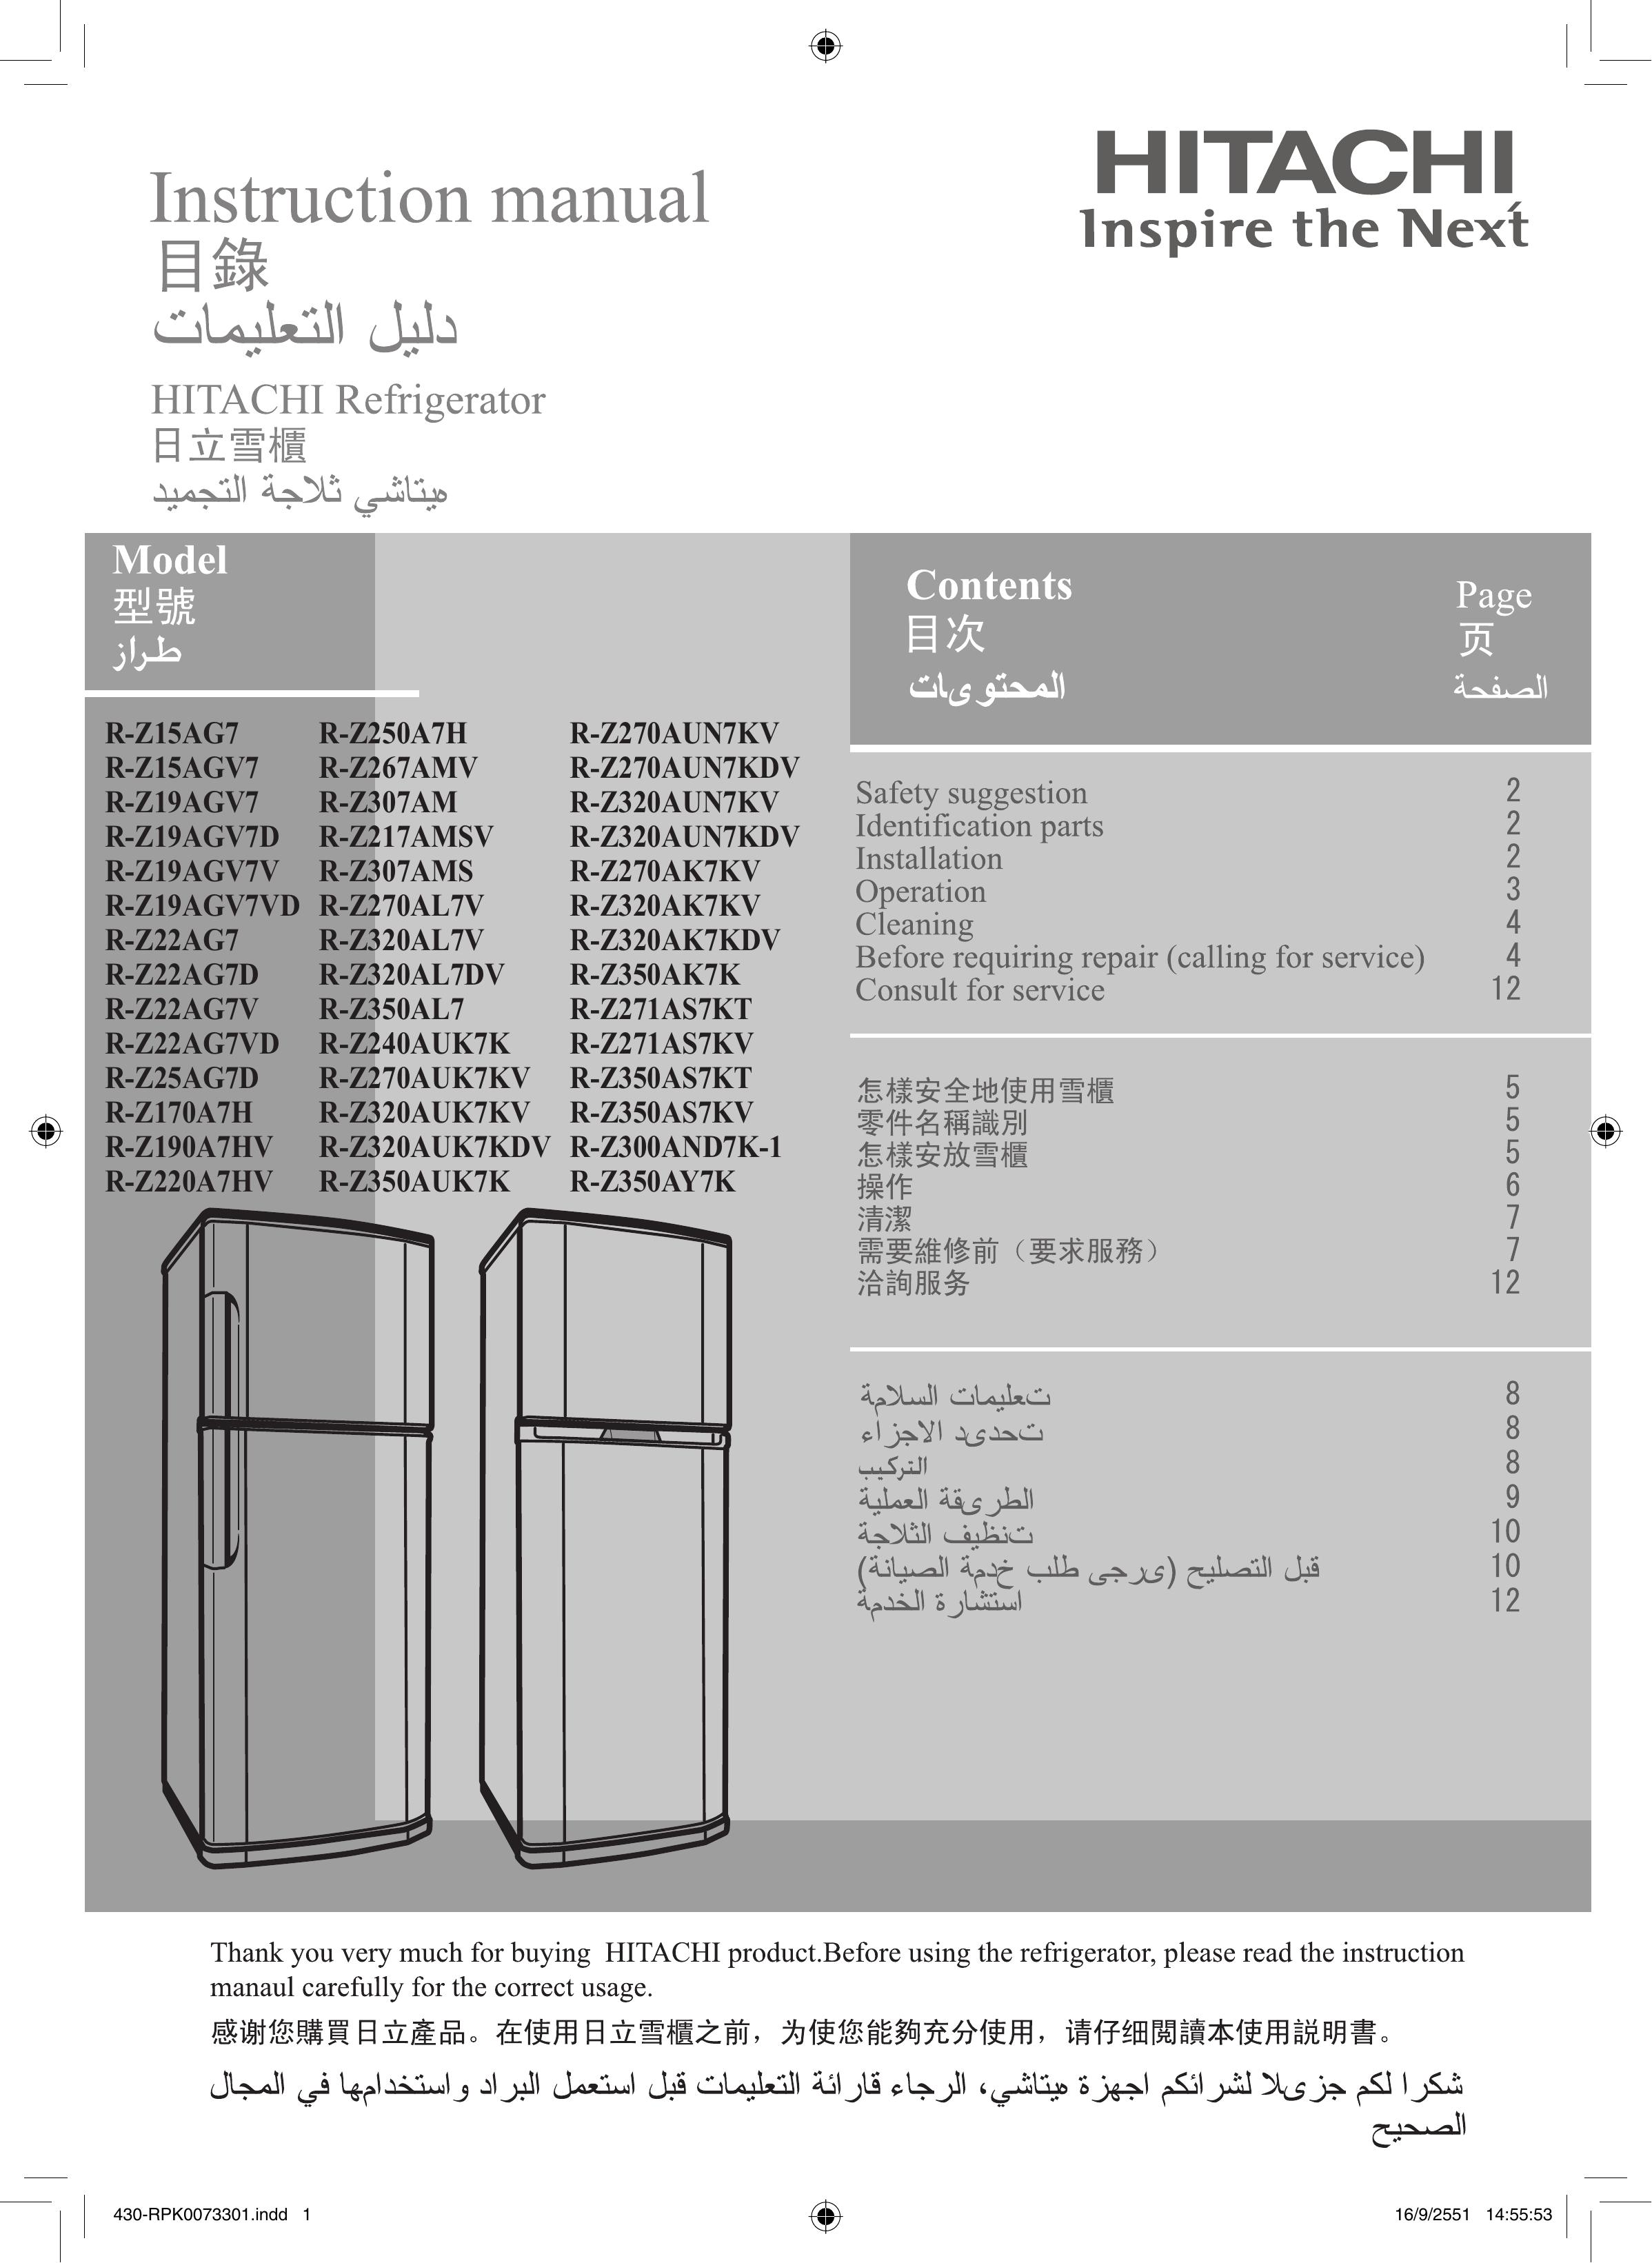 Hitachi hitachi refrigerator Refrigerator User Manual